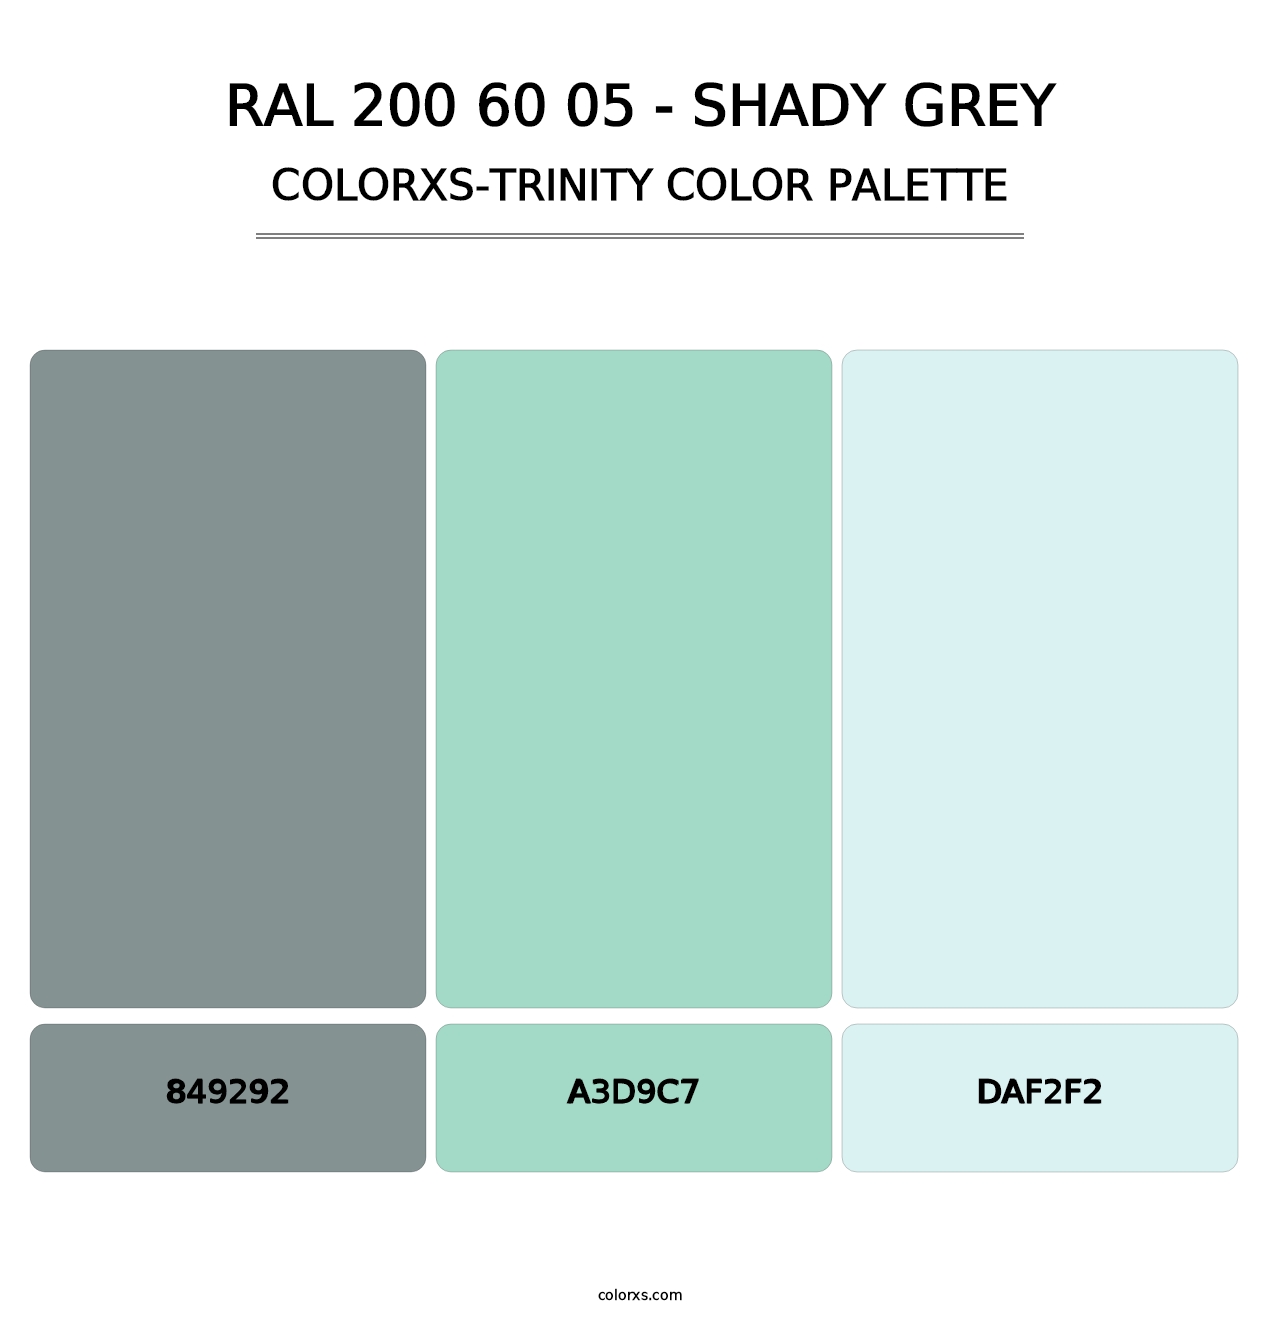 RAL 200 60 05 - Shady Grey - Colorxs Trinity Palette